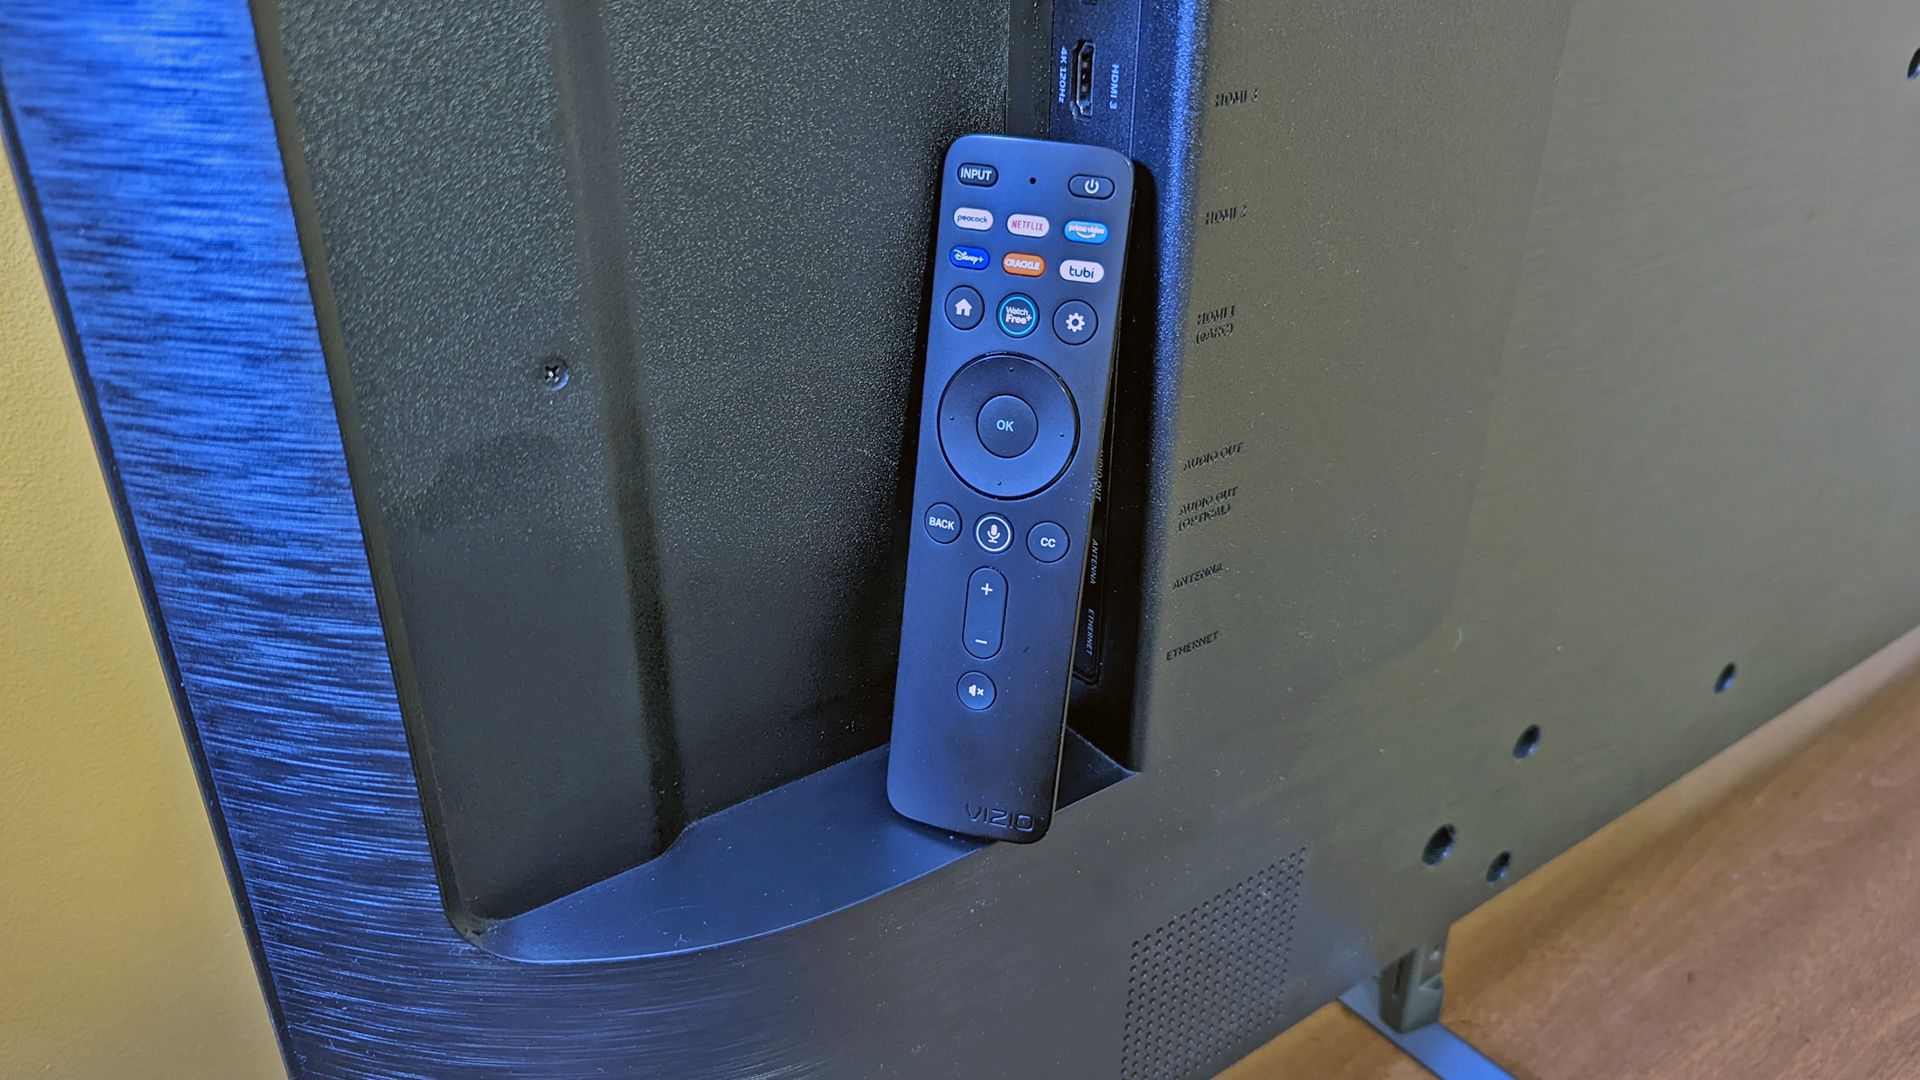 A Vizio remote against the back of a TV